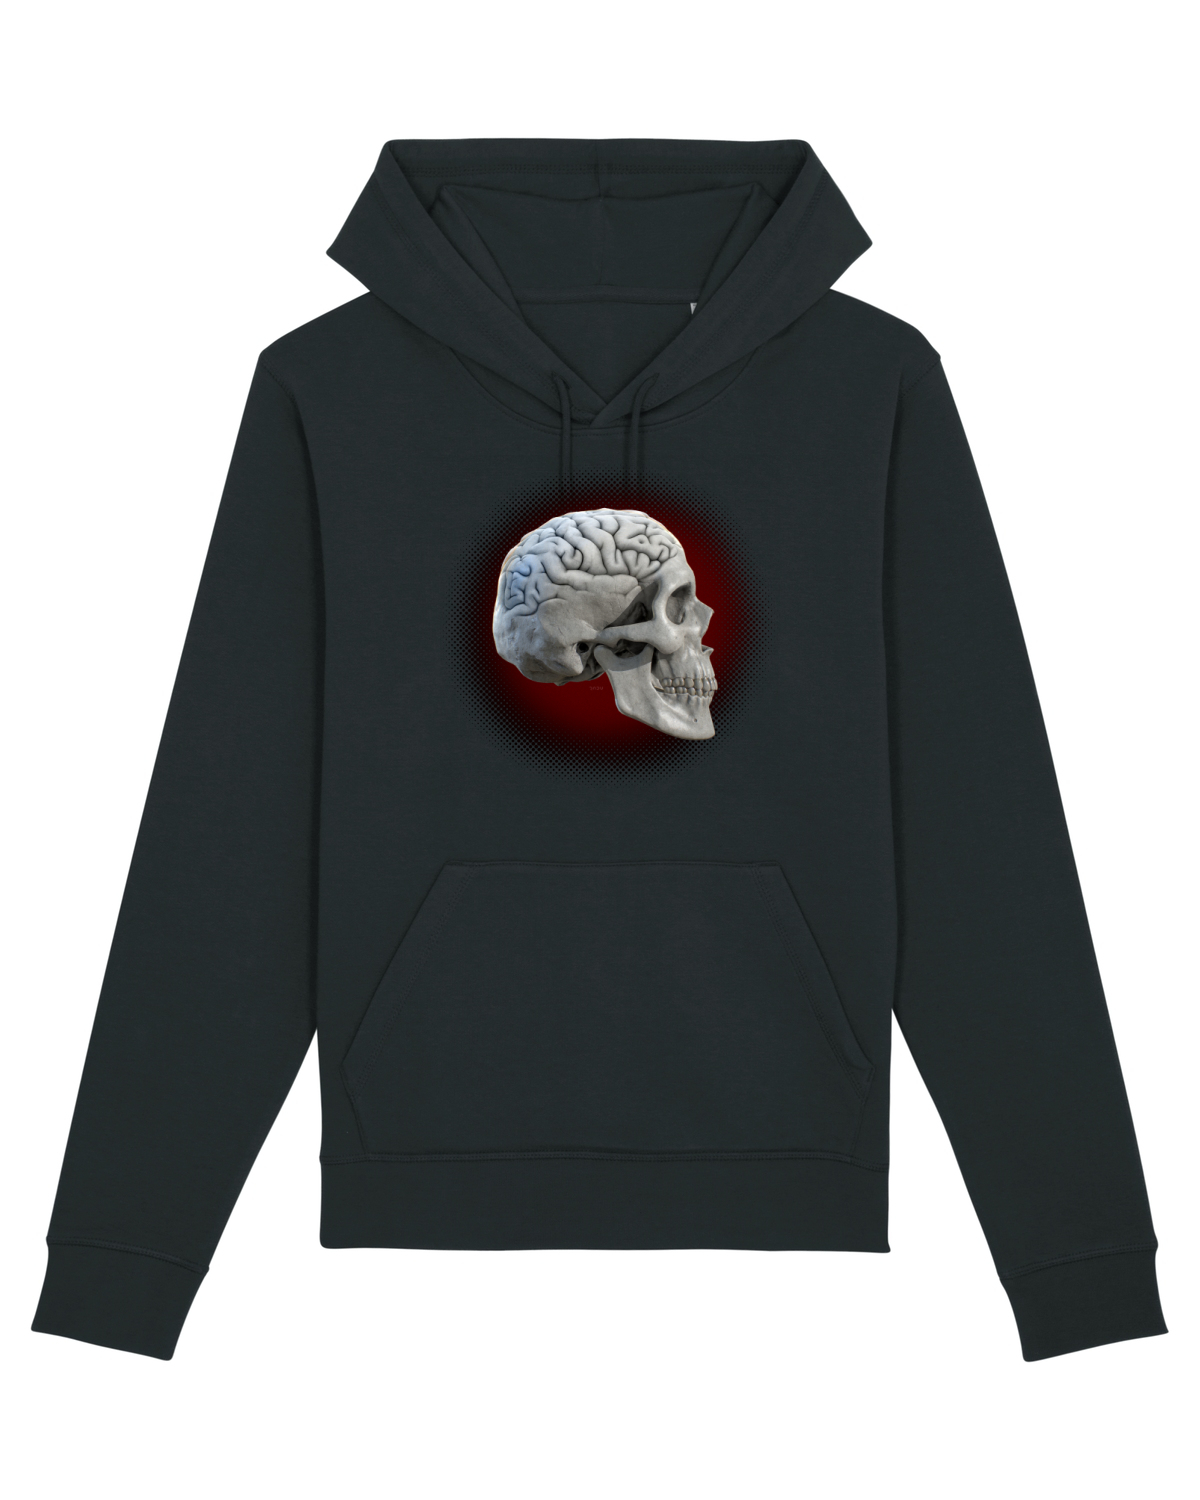 Craniu cu creier - skullbrain 01